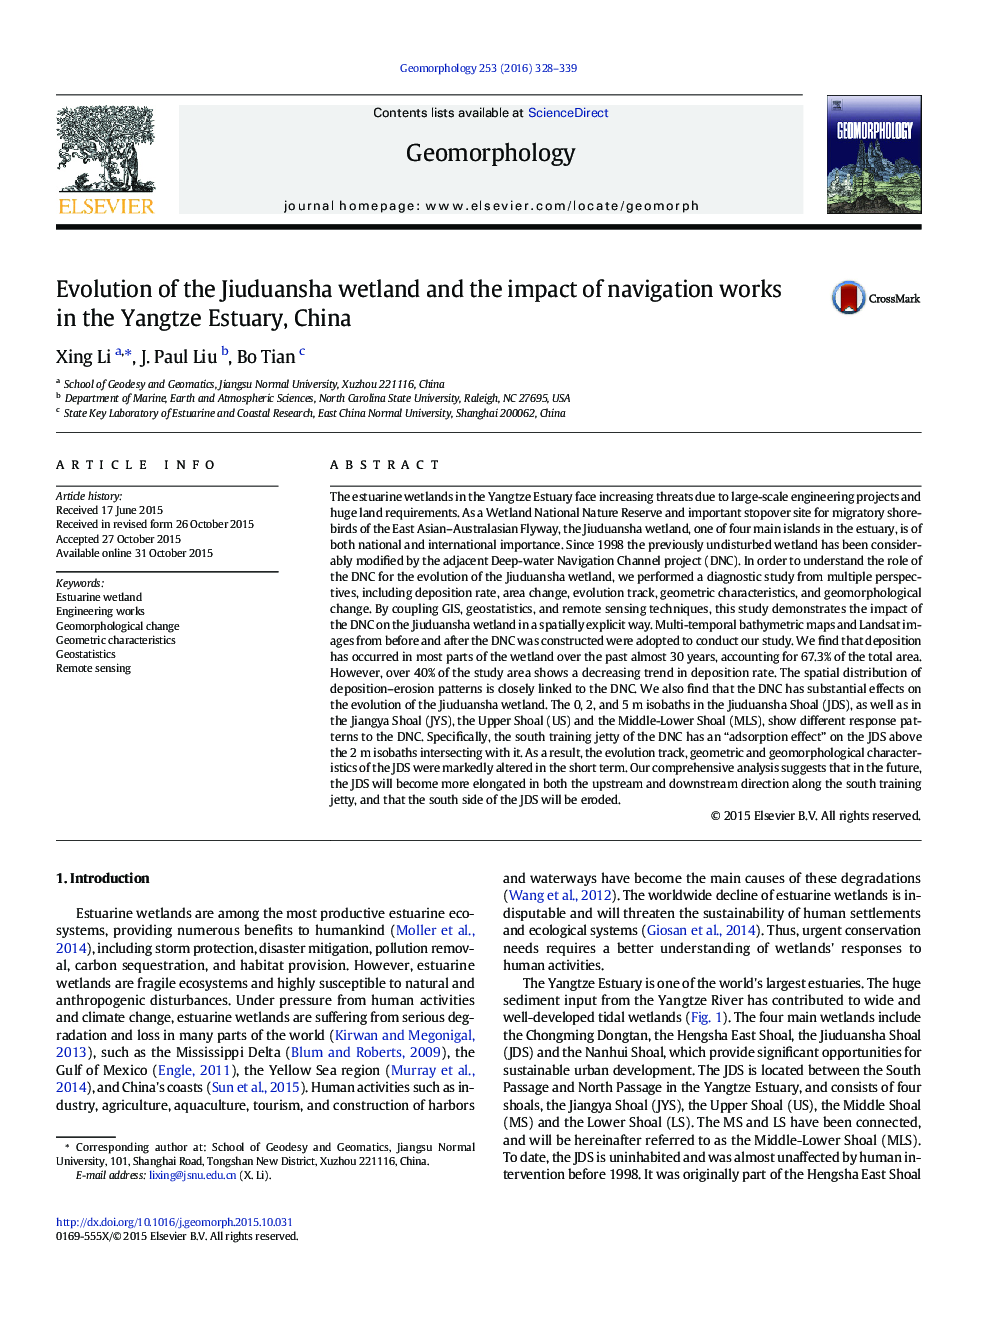 Evolution of the Jiuduansha wetland and the impact of navigation works in the Yangtze Estuary, China